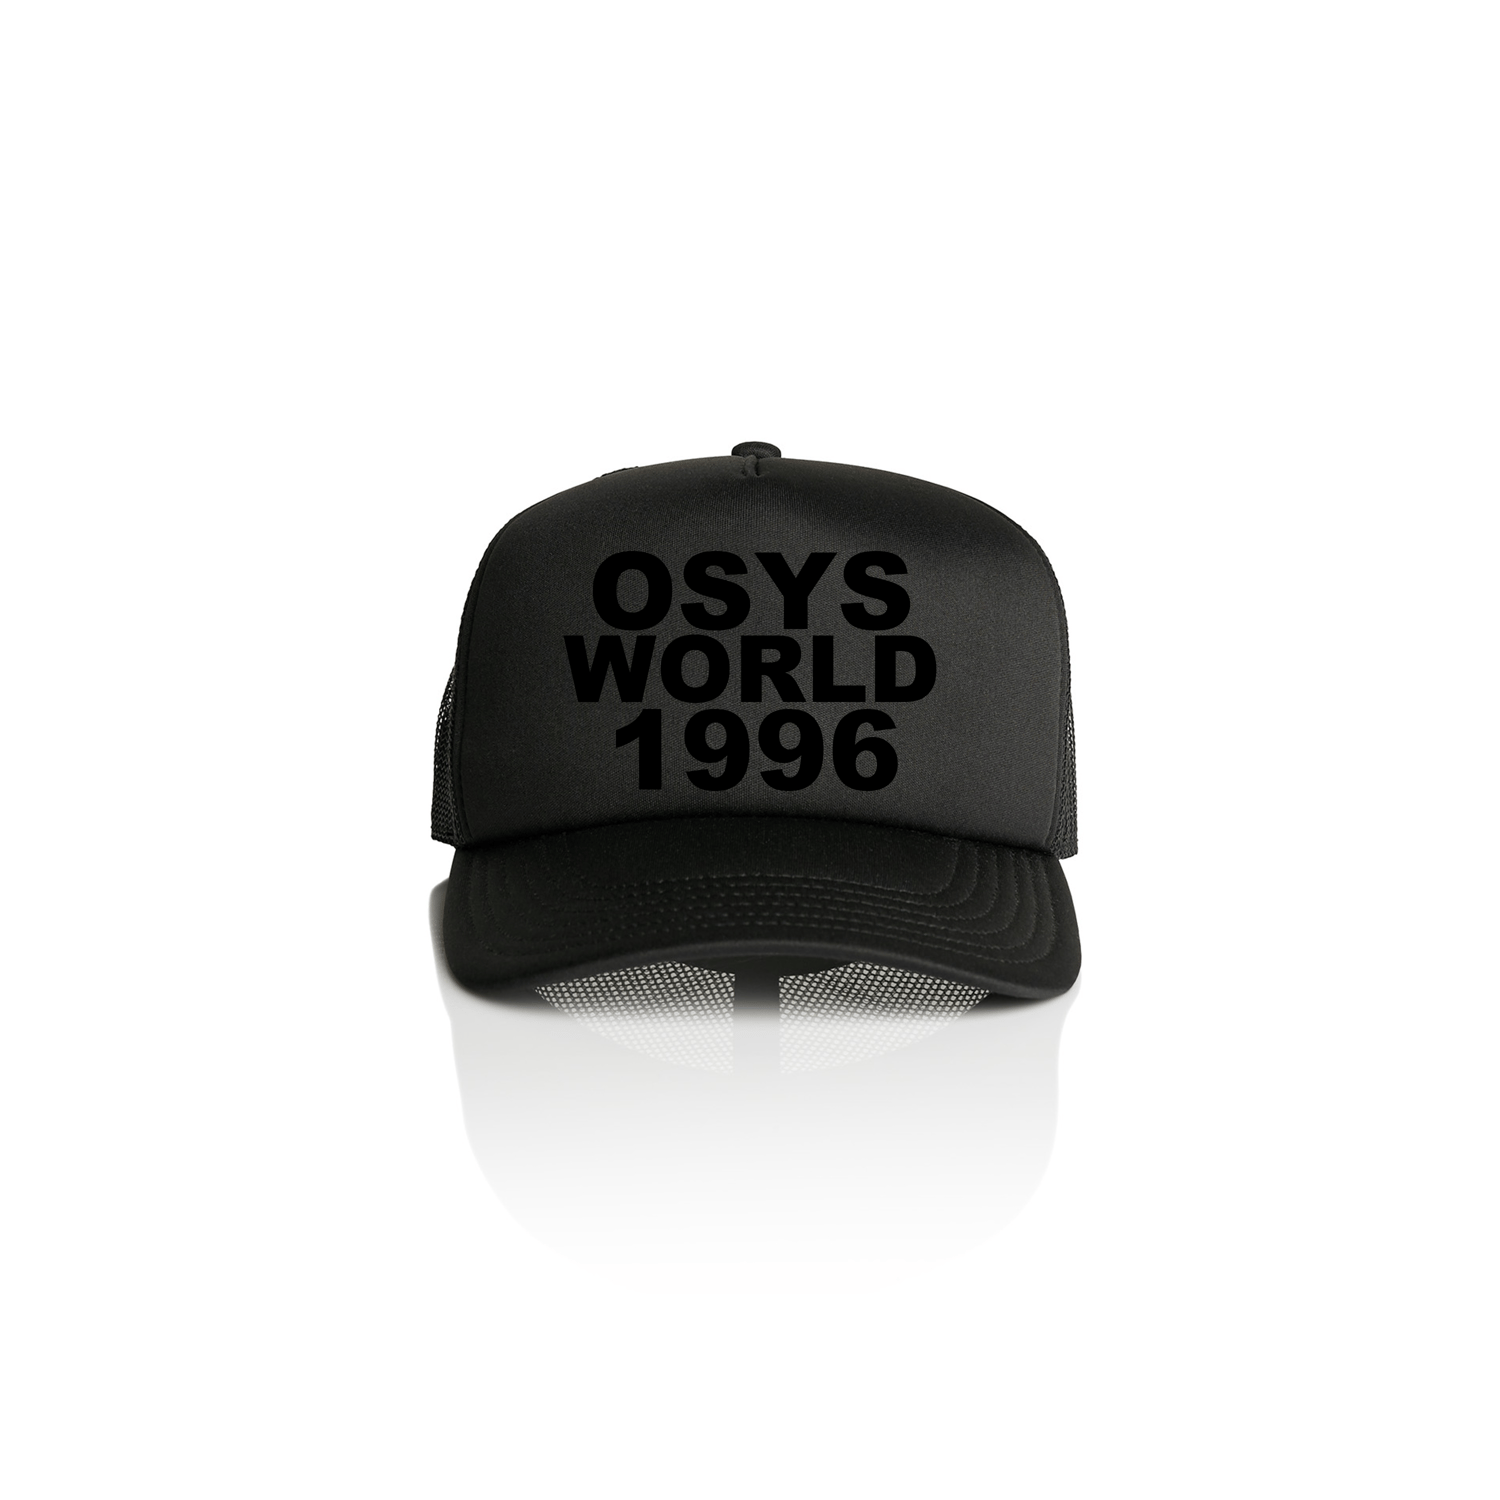 OSYS WORLD 1996 TRUCKER HAT- BLACK/BLACK